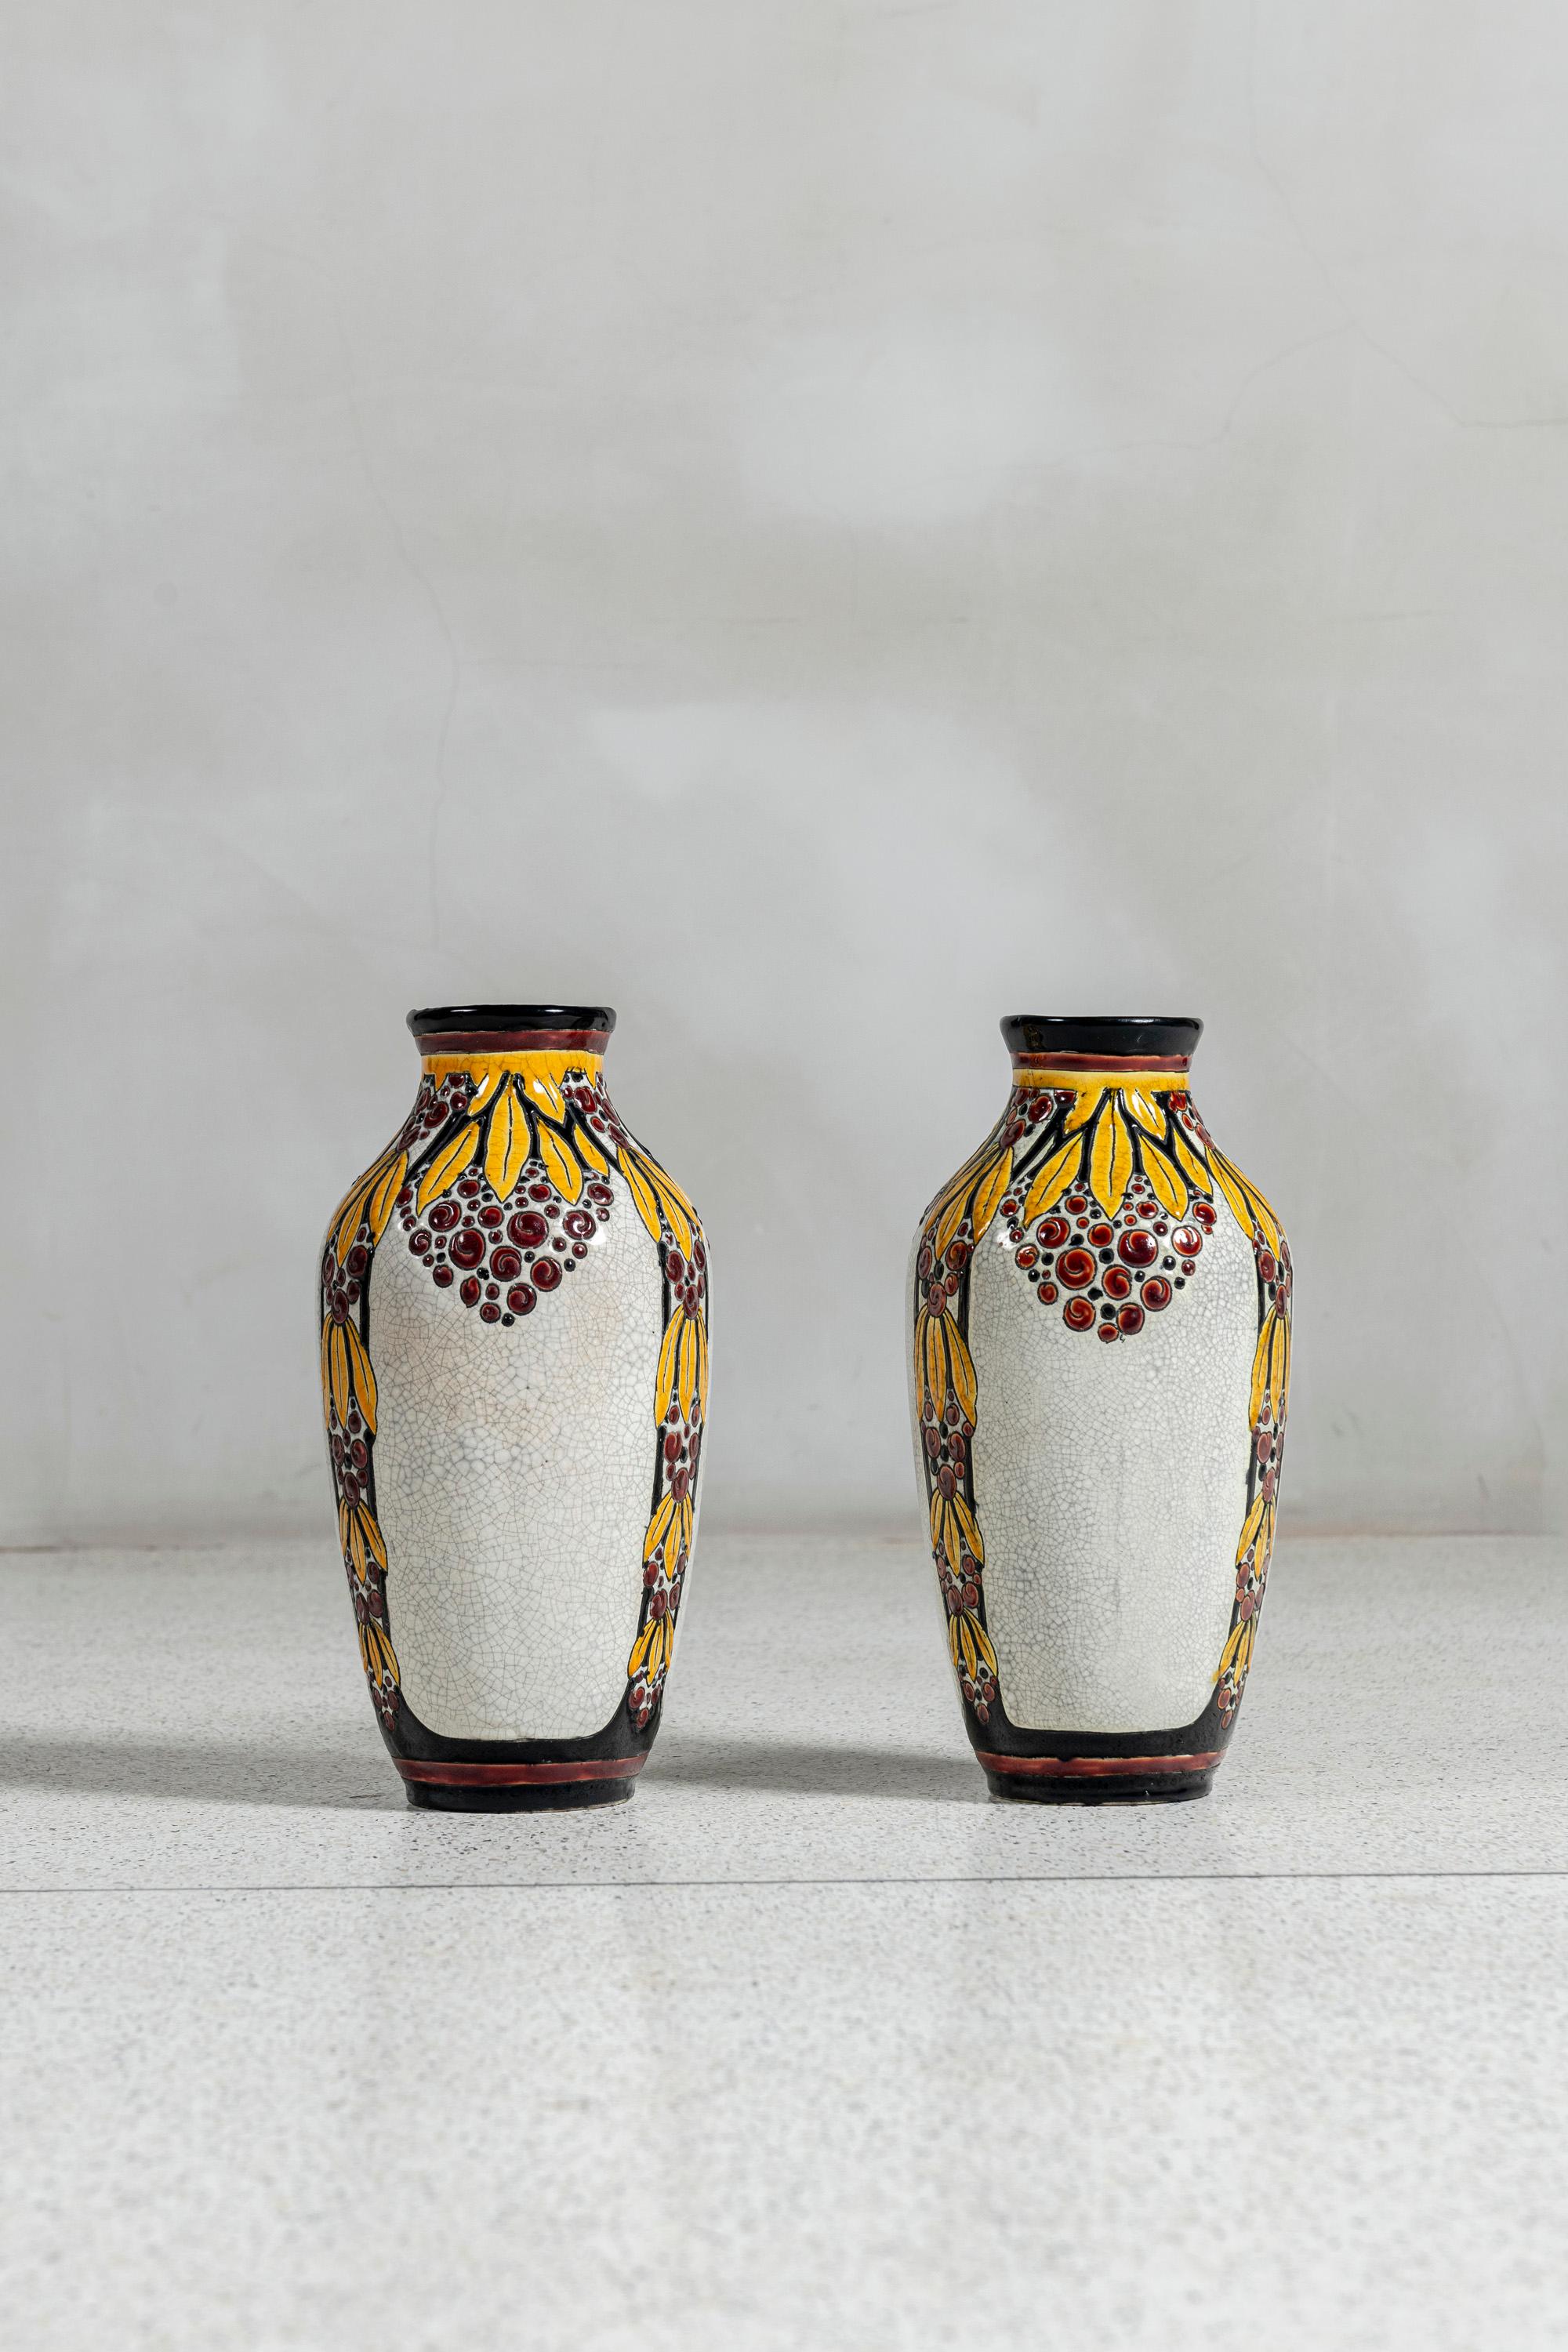 Pair of enamel ceramic flower vases by Charles Catteau signed B.F.K. La Louvière Belgiques by Charles Catteau, Belgium, circa 1920.